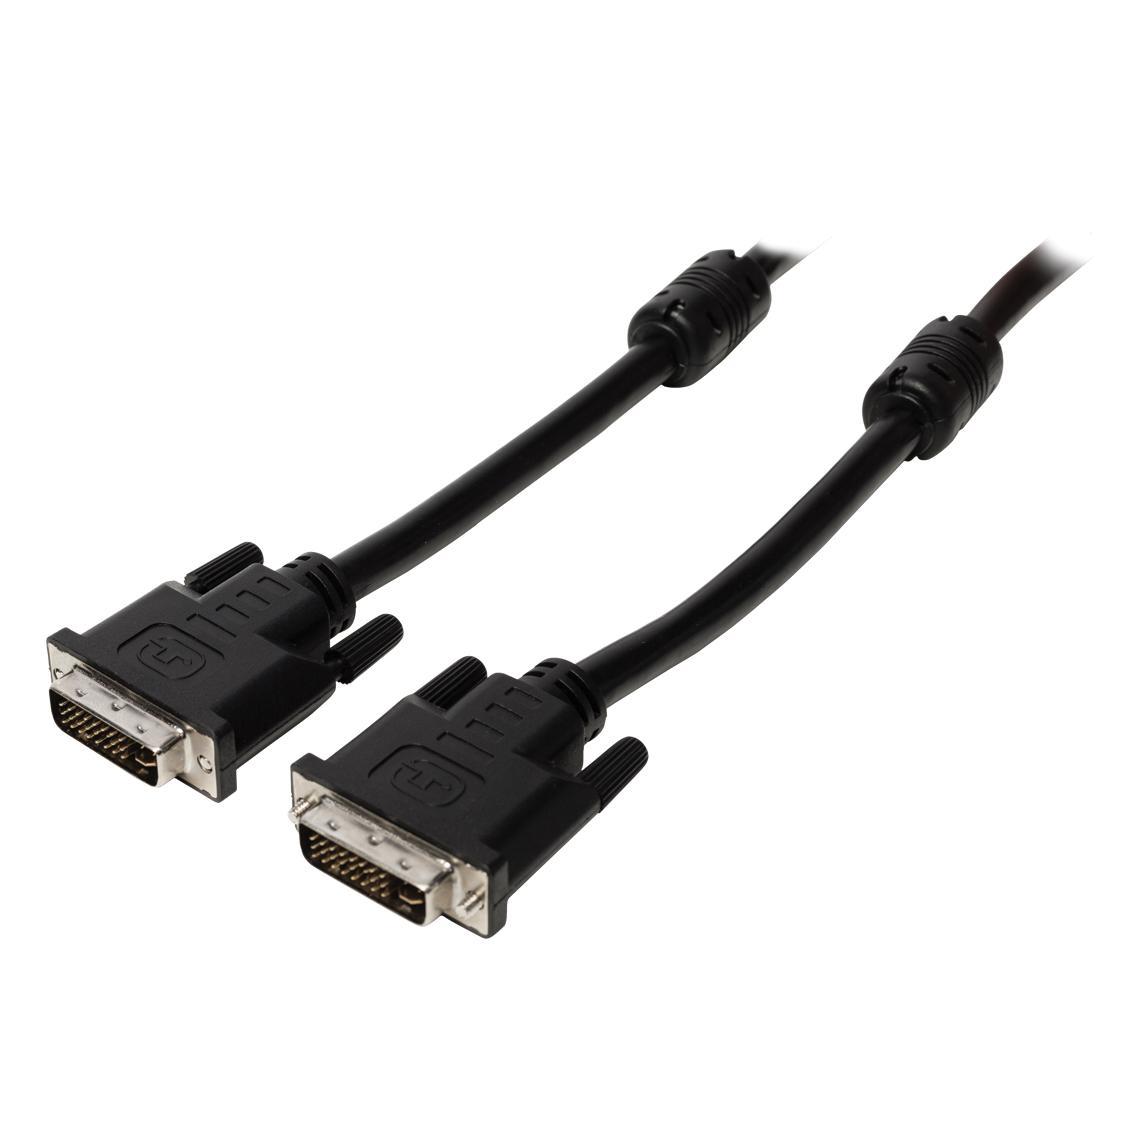 DVI kabel DVI-I 24+5-pin male DVI-I 24+5-pin male 2,00 m zwart